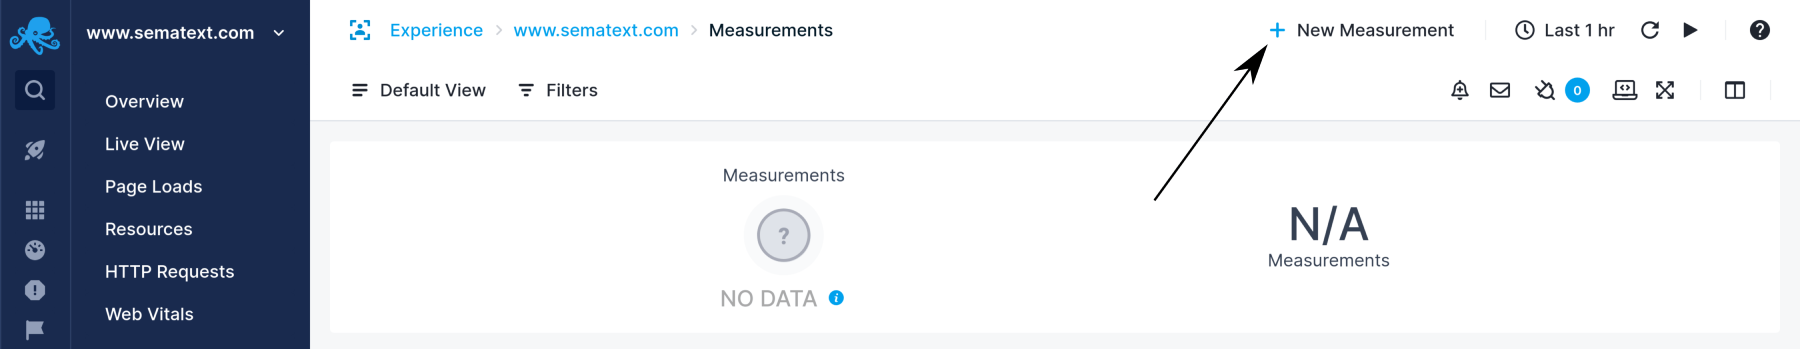 New Measurement button pointer